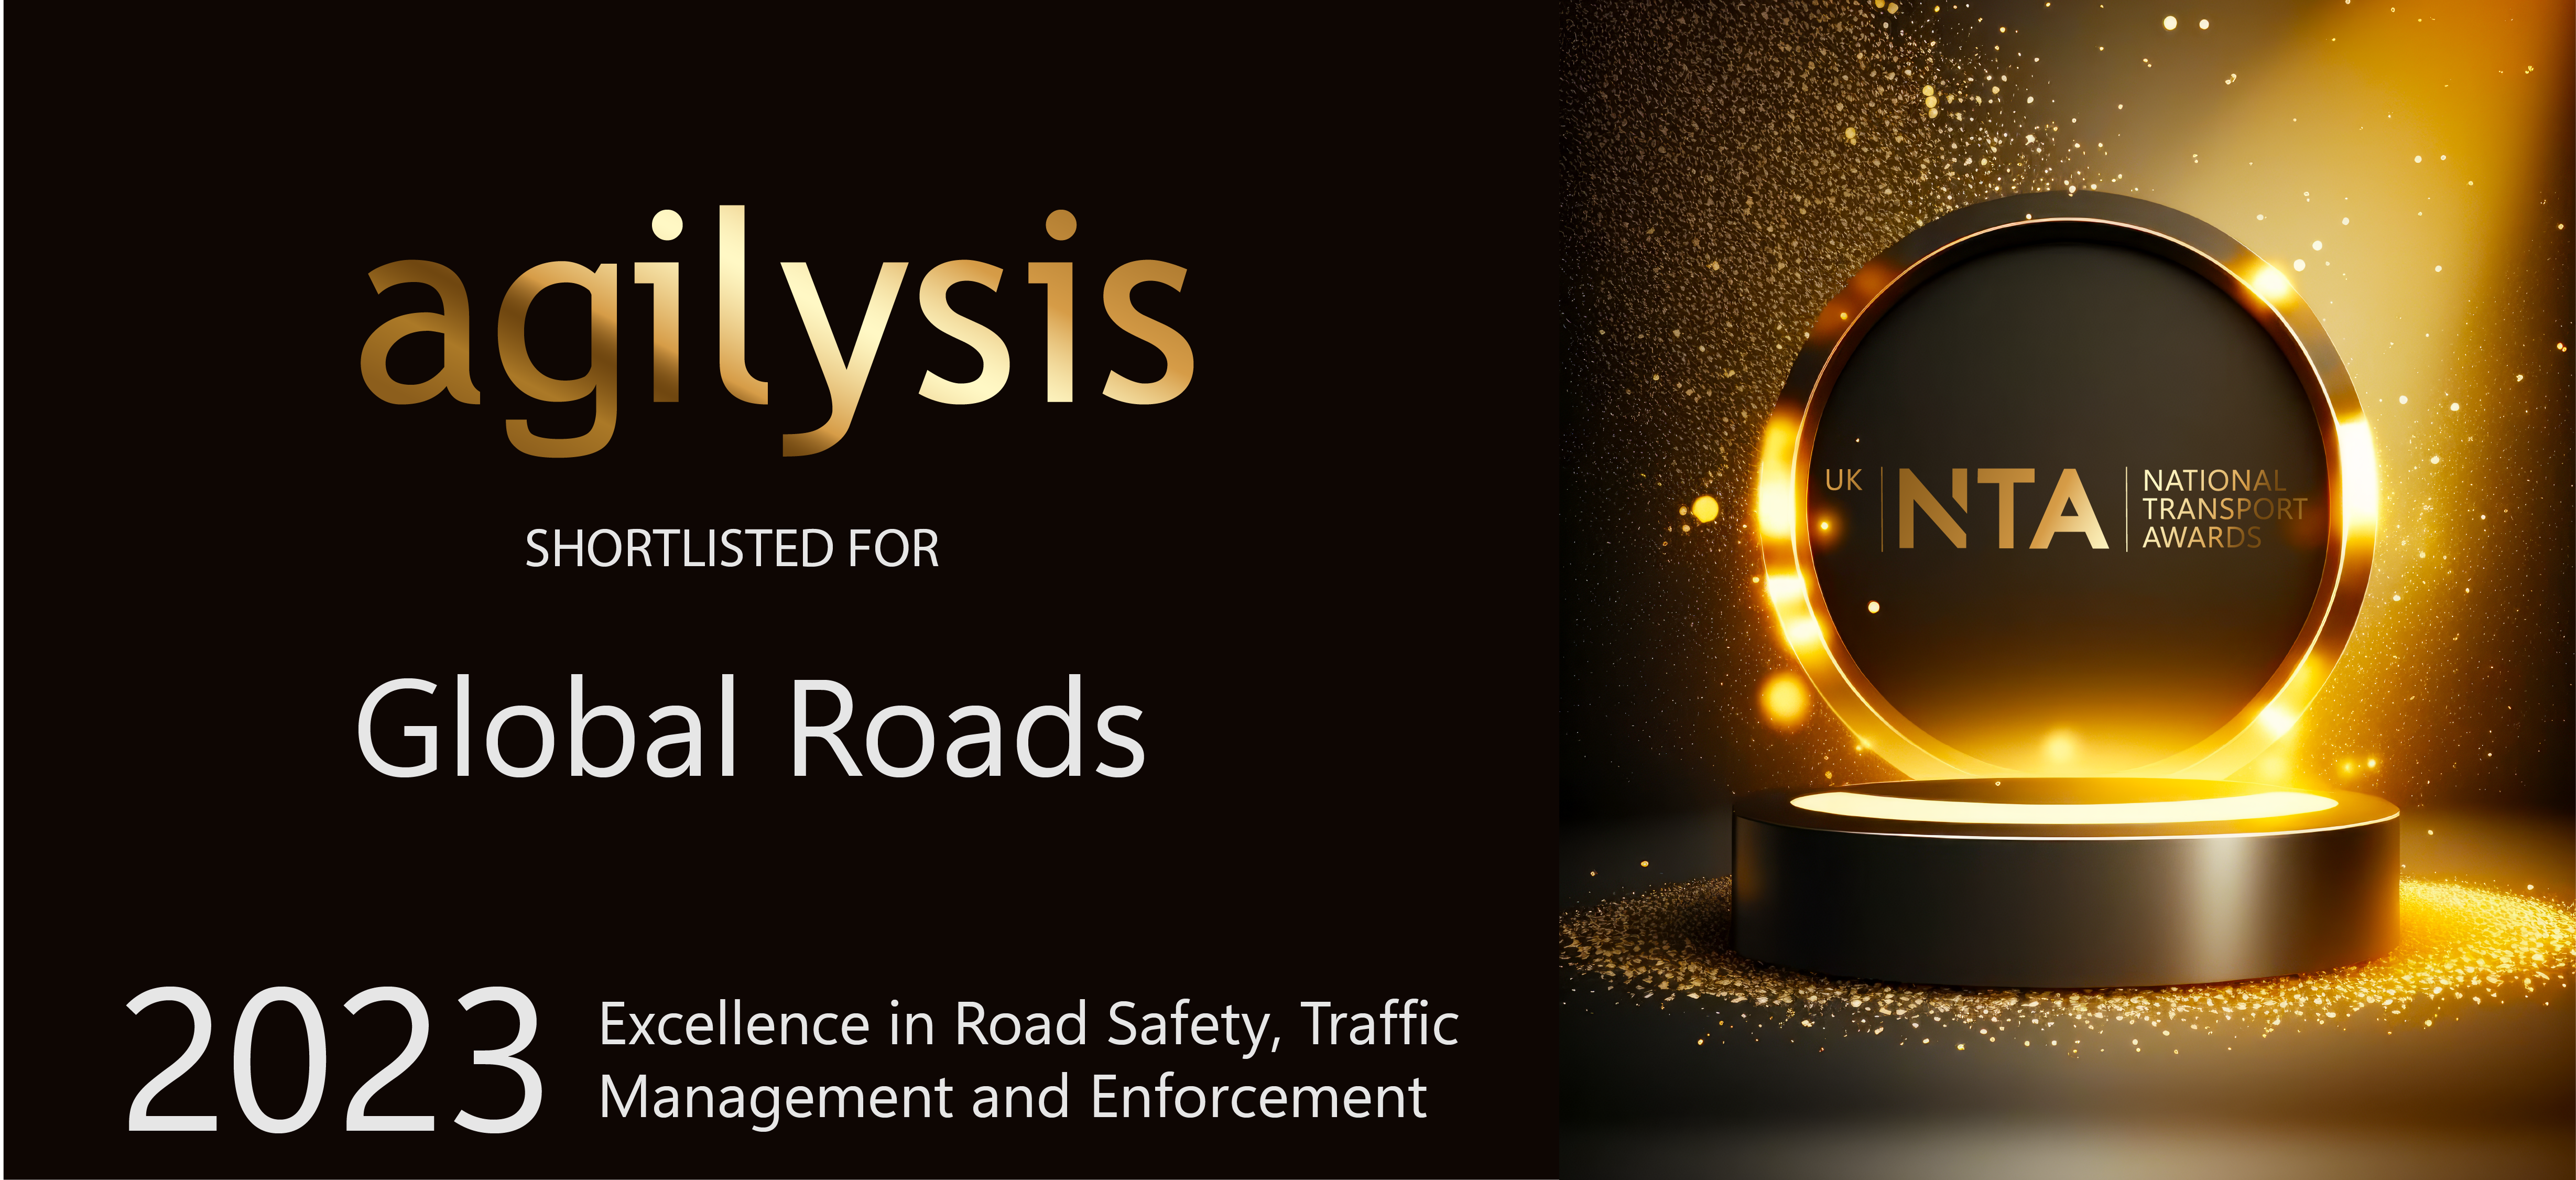 Agilysis shortlisted at National Transport Award for Global Roads